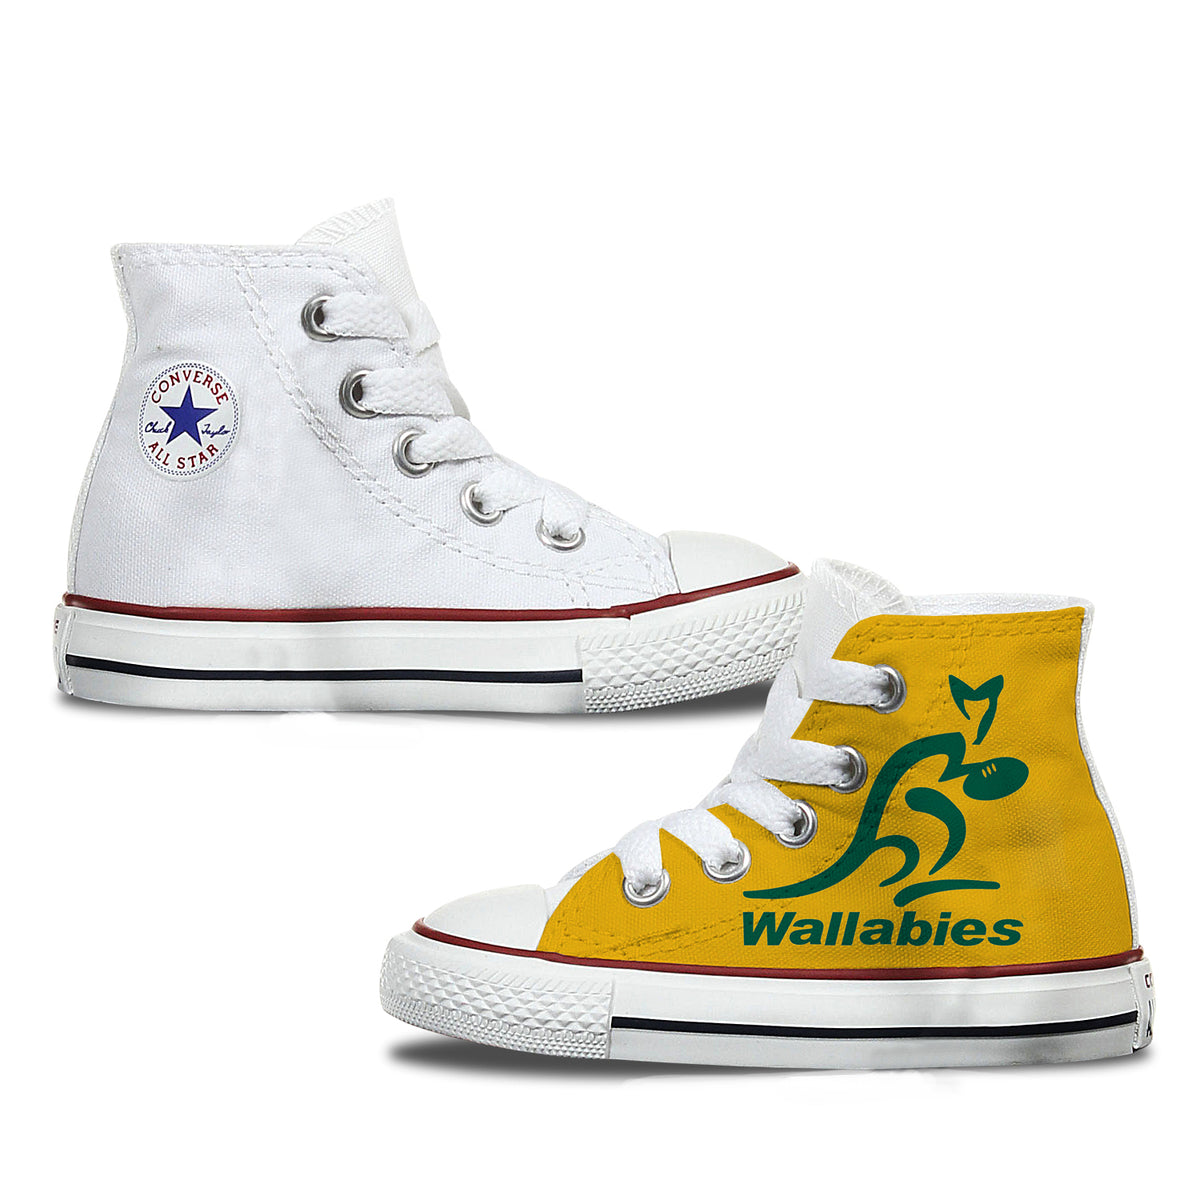 Wallabies Converse